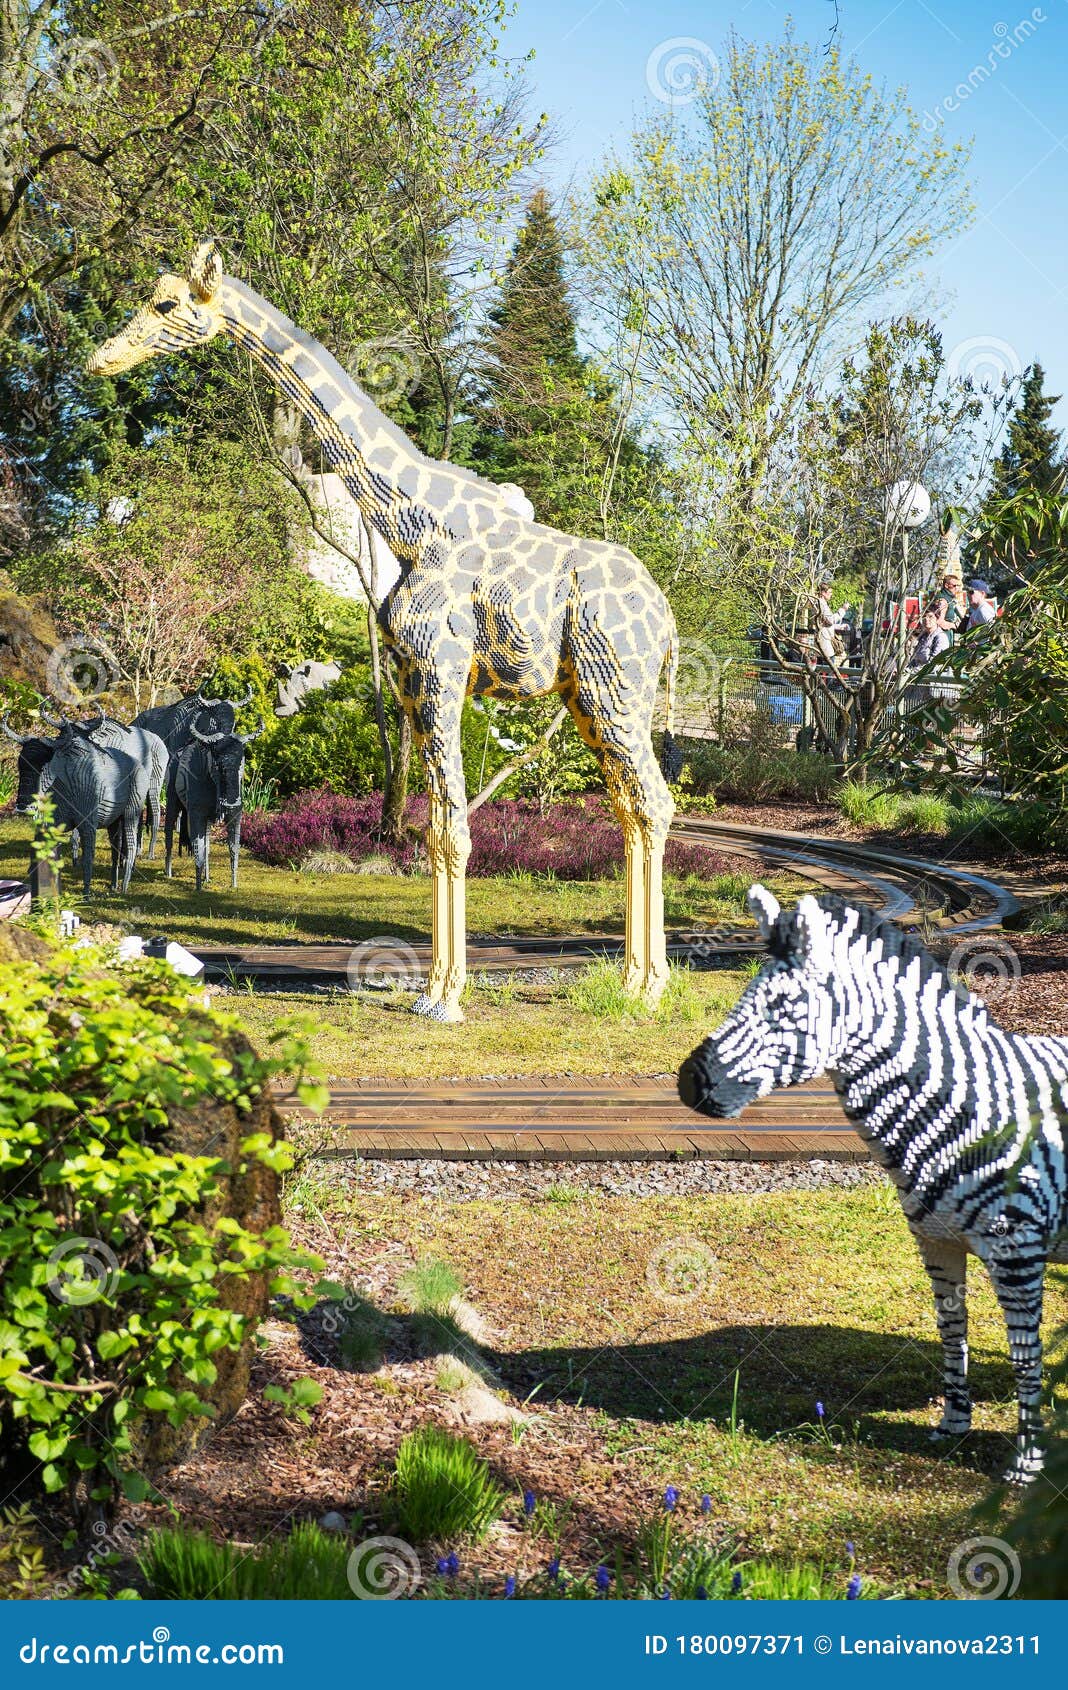 Animals Like Giraffe and Zebra Built by Toy Bricks. Editorial Photo - Image  of tourist, square: 180097371